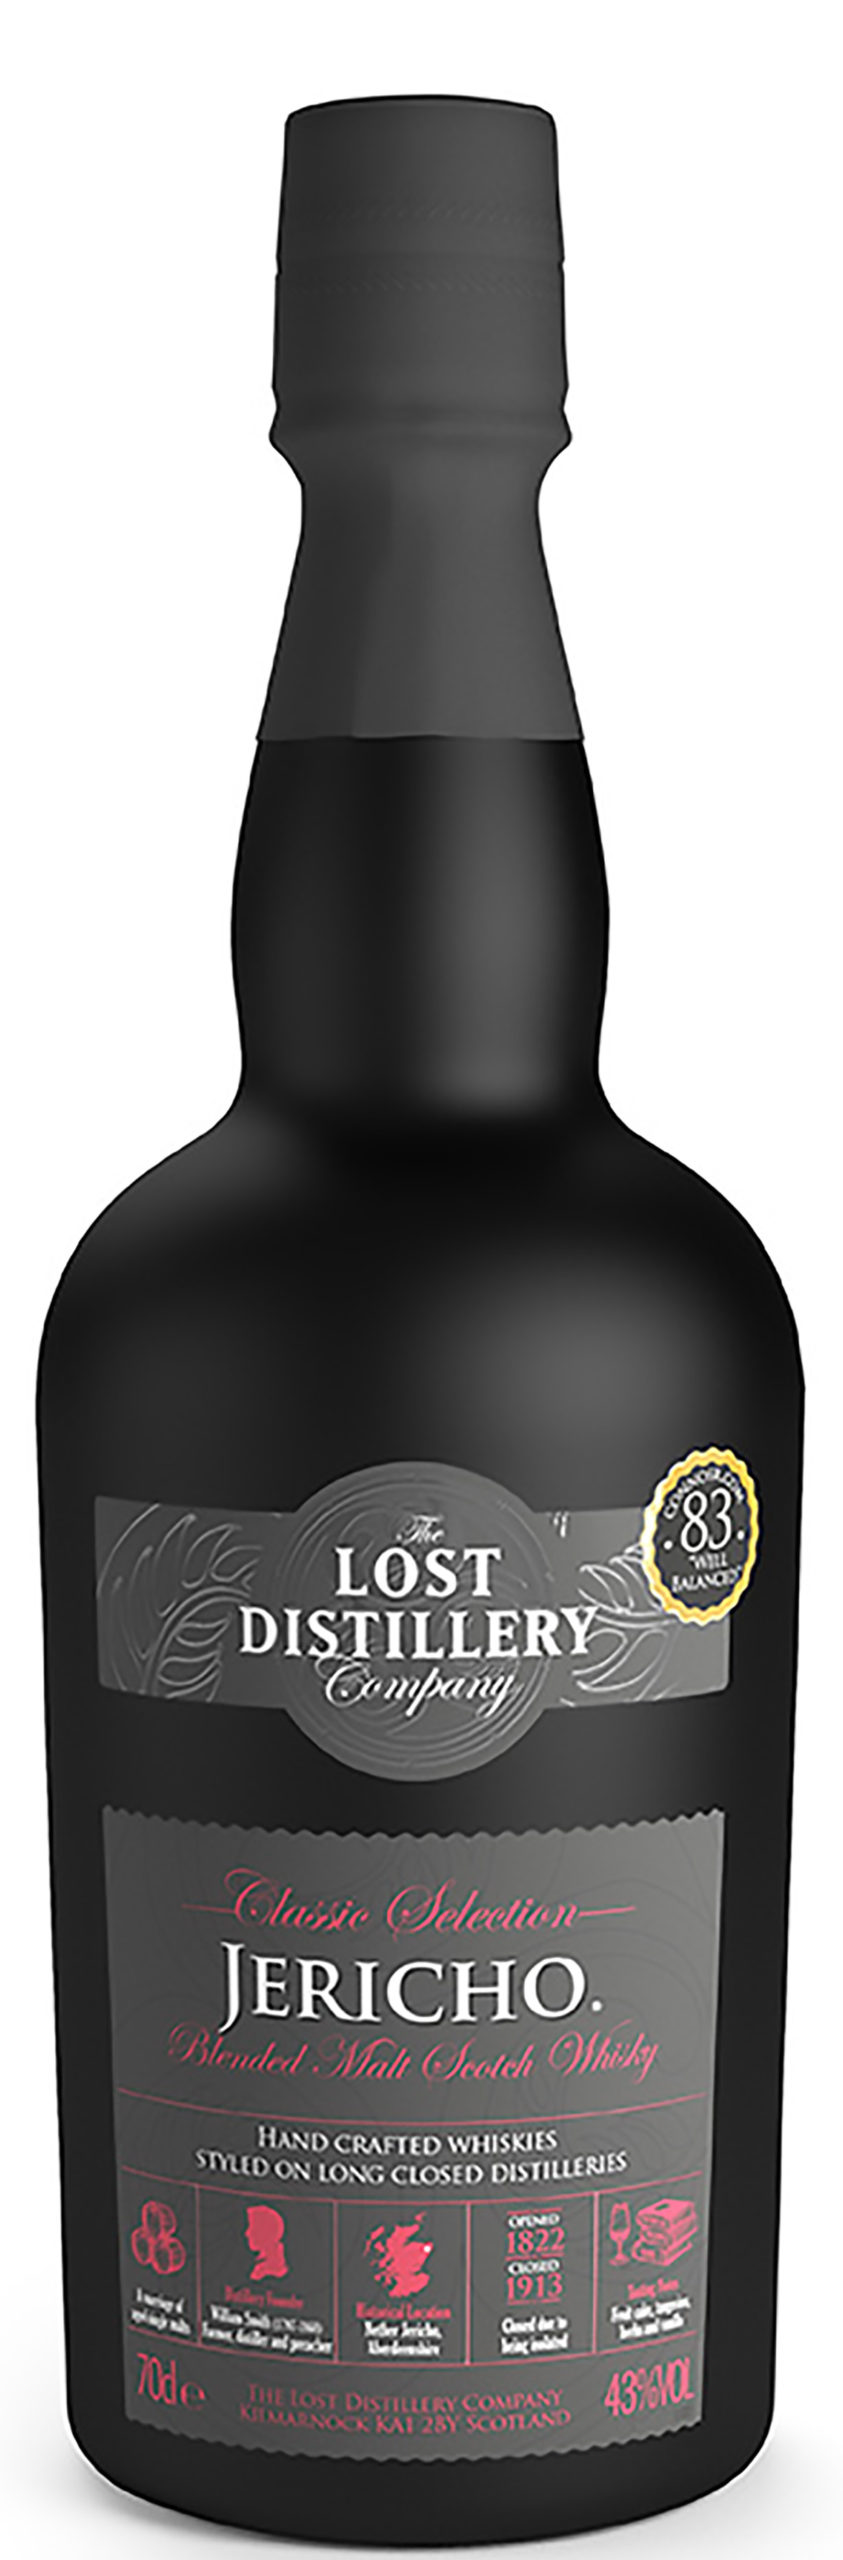 The Lost Distillery Jericho Blended Malt